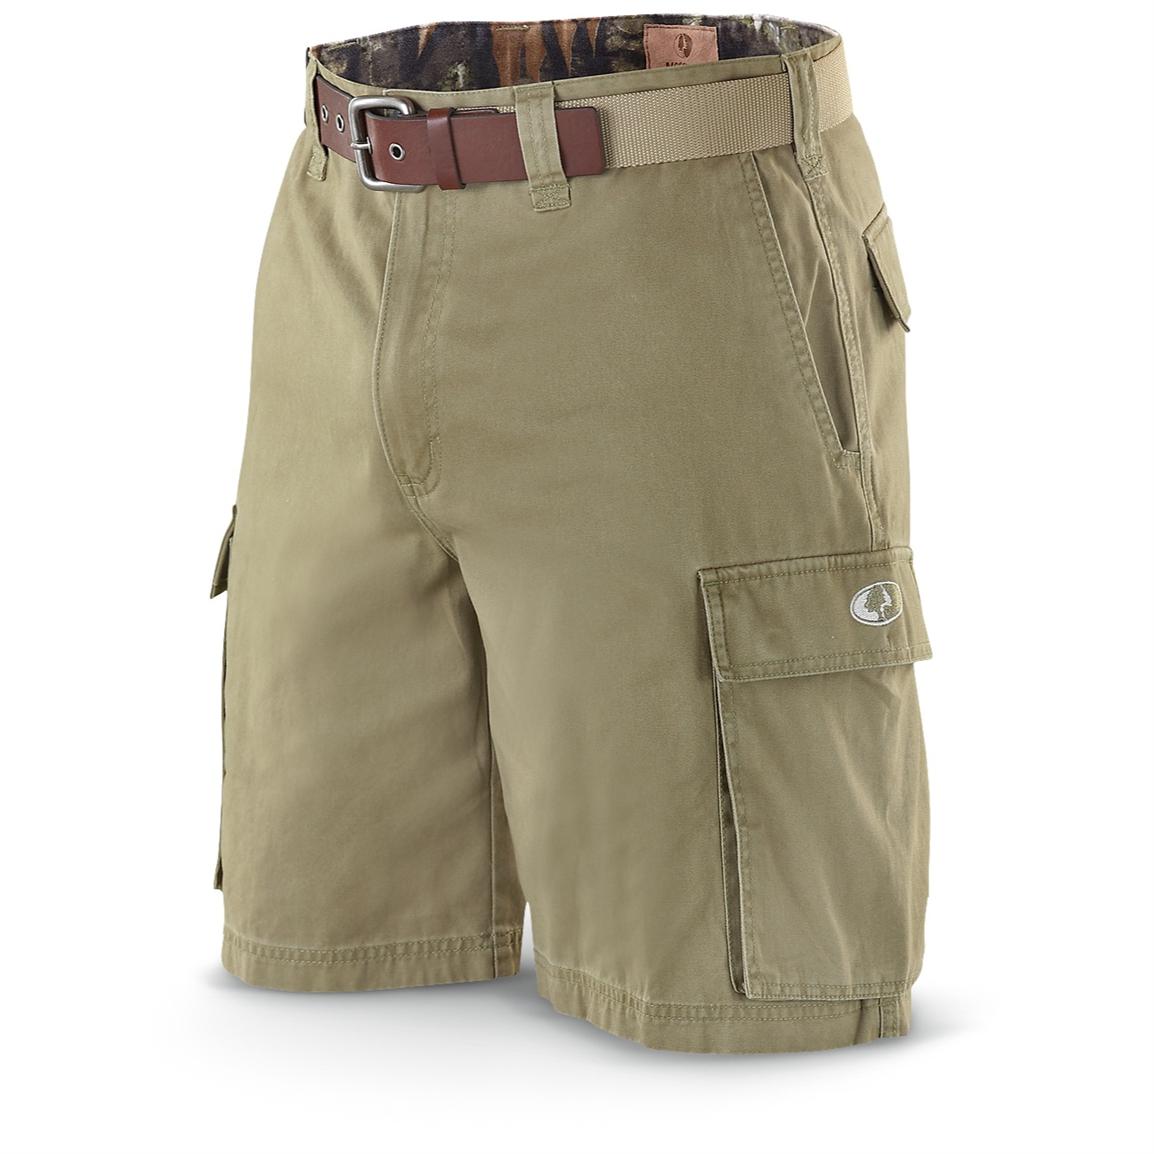 Mossy Oak® Safari Cargo Shorts - 208370, Shorts at Sportsman's Guide